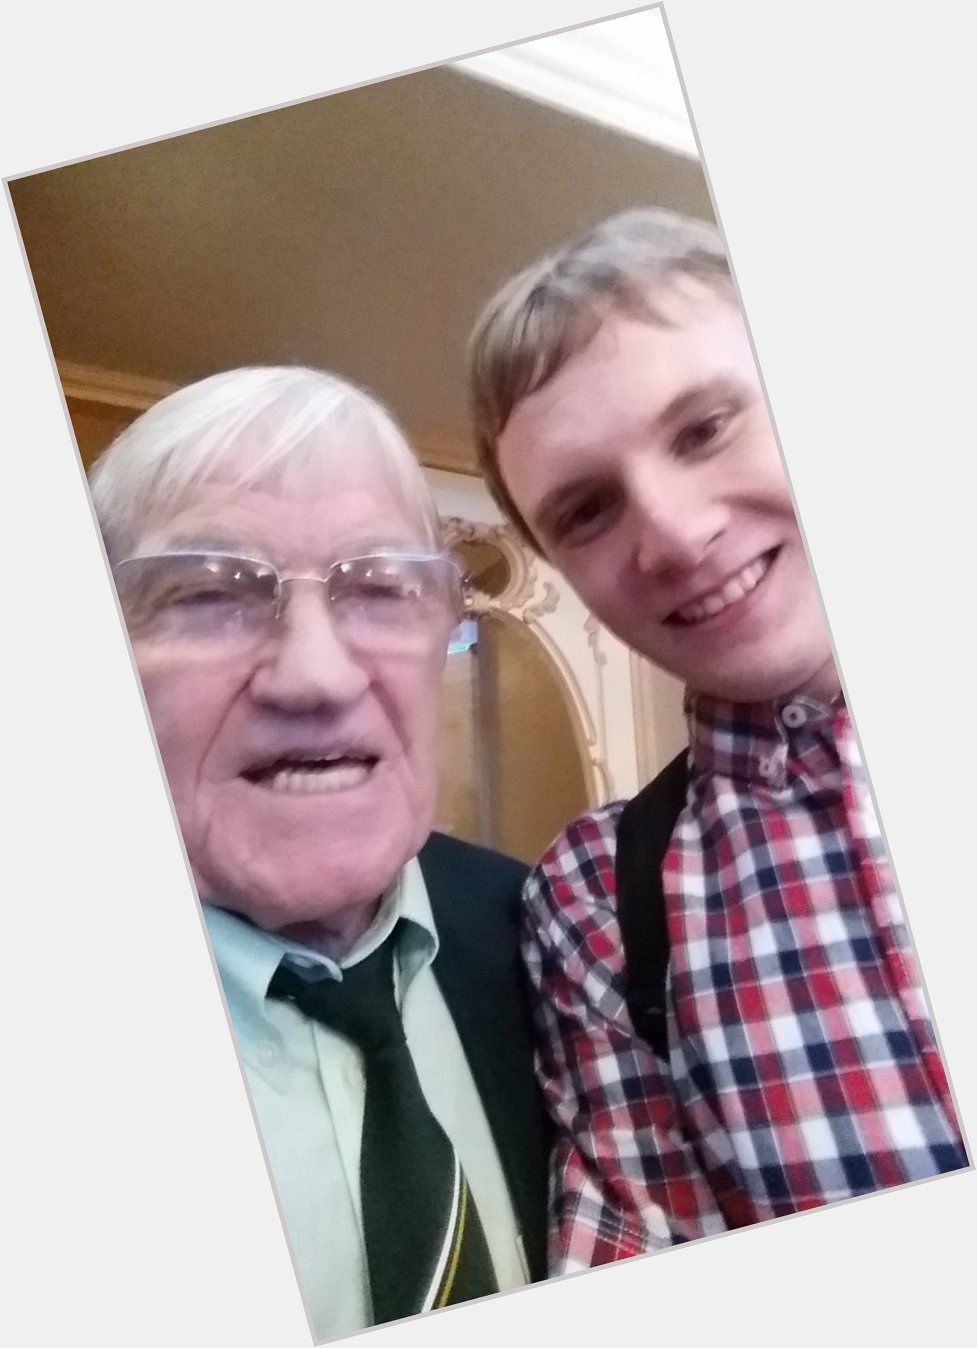  happy birthday Bertie Auld had the pleasure of meeting this gentleman at the celtic musical last September 